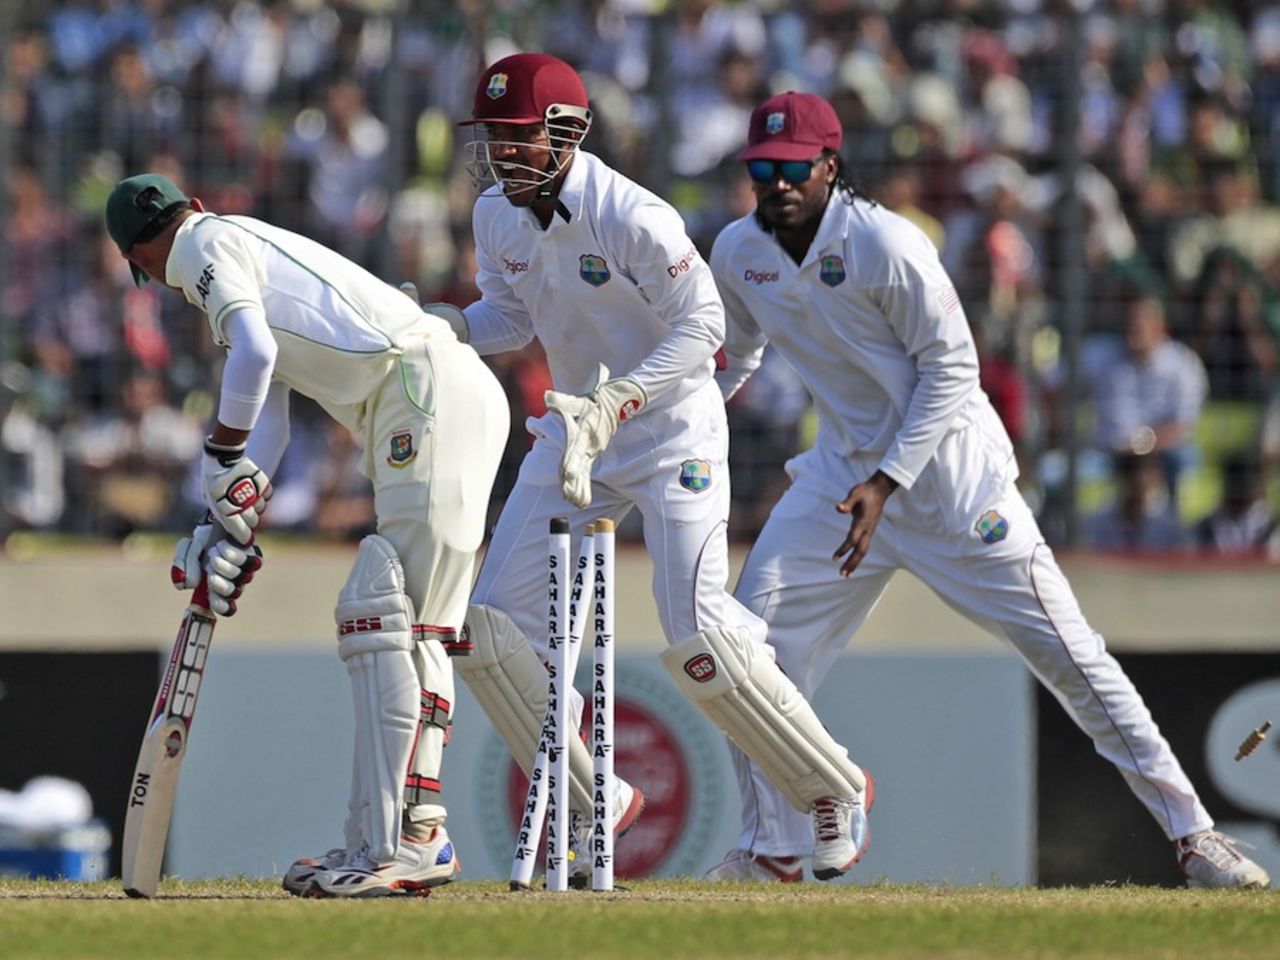 Nasir Hossain was bowled for 21, Bangladesh v West Indies, 1st Test, Mirpur, 5th day, November 17, 2012